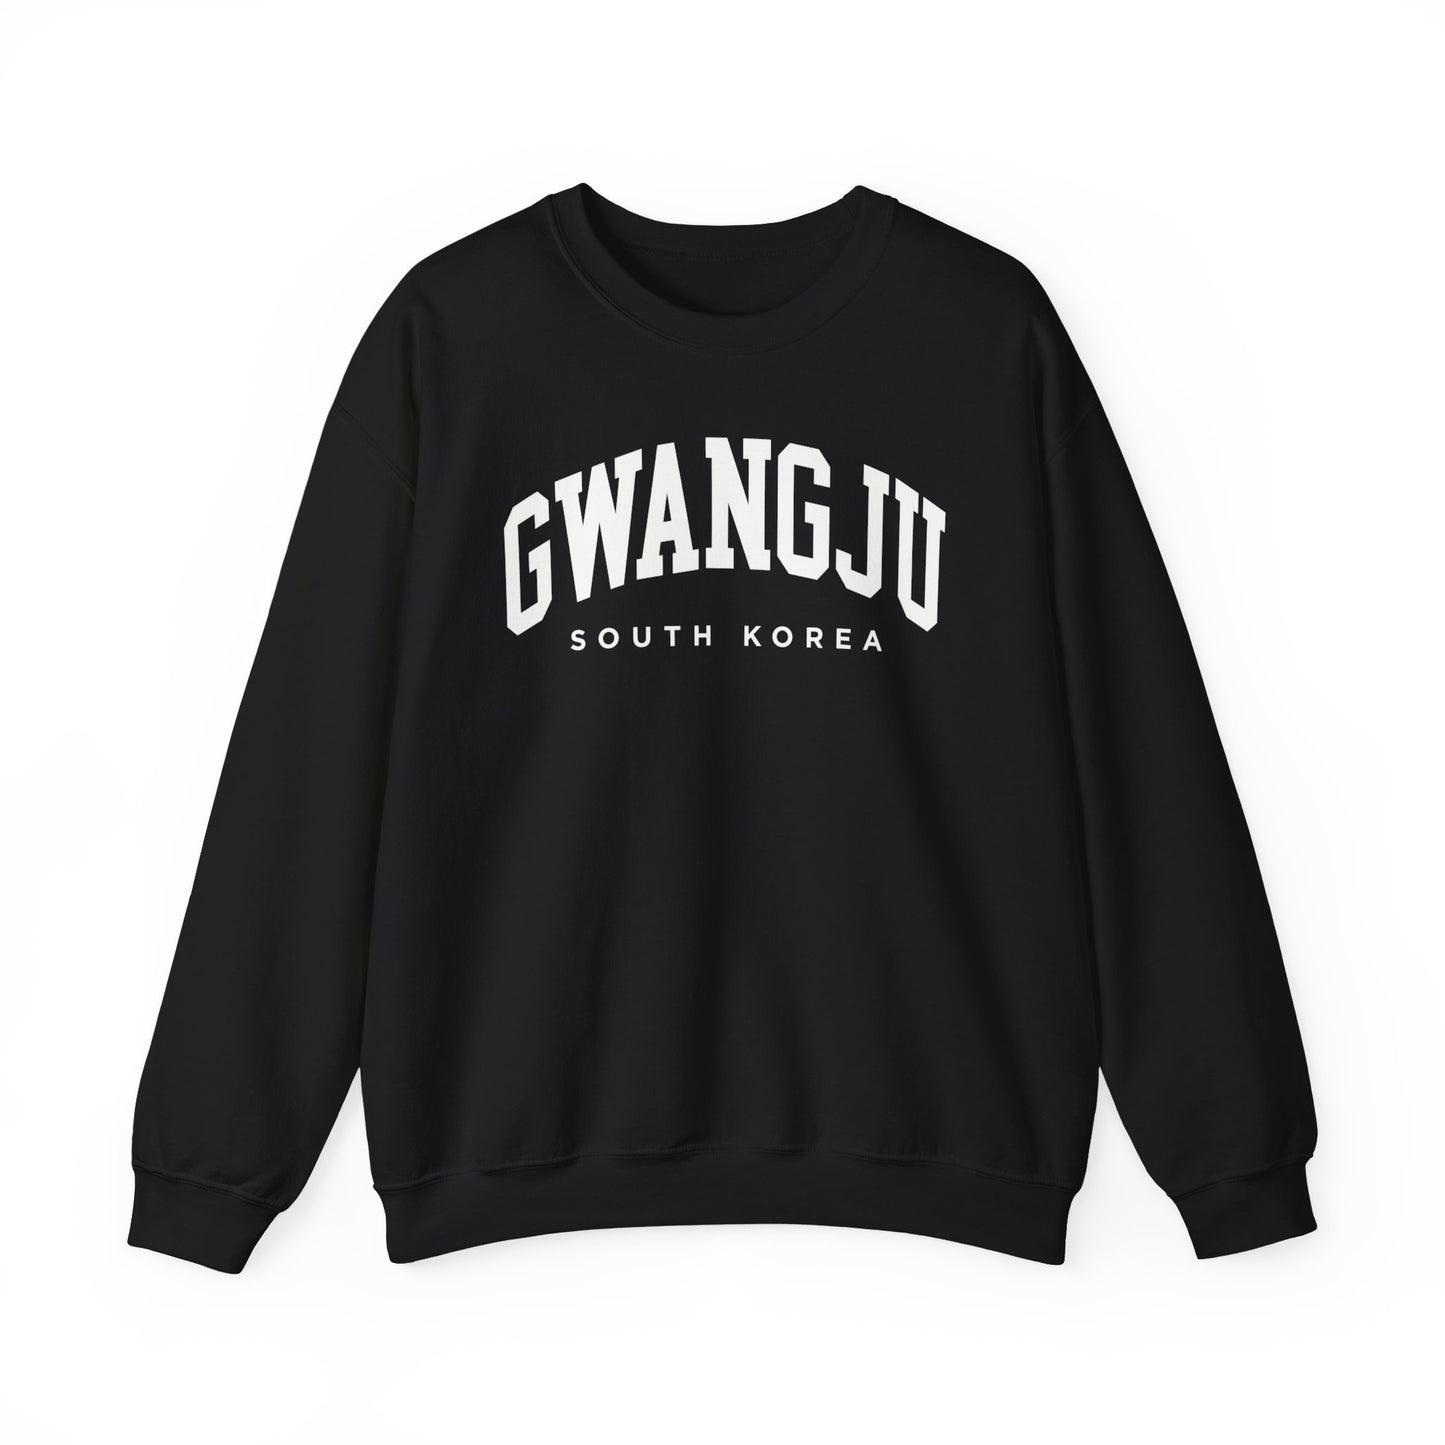 Gwangju South Korea Sweatshirt